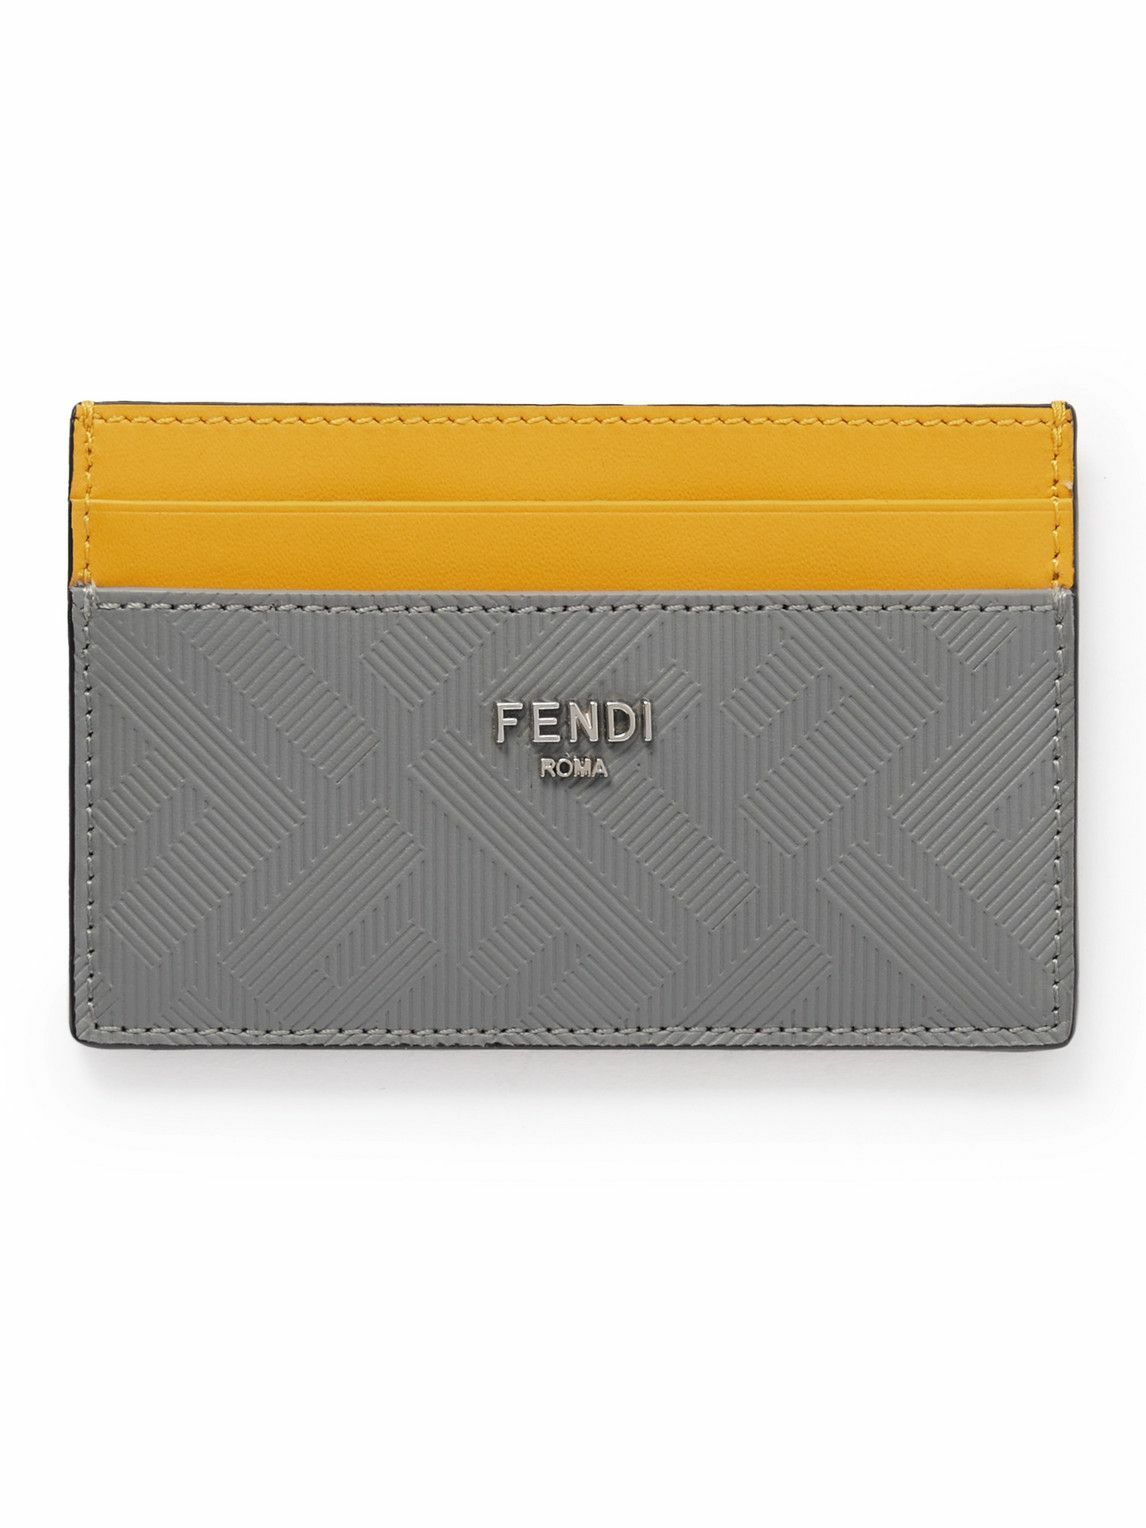 Fendi - Logo-Debossed Leather Cardholder Fendi